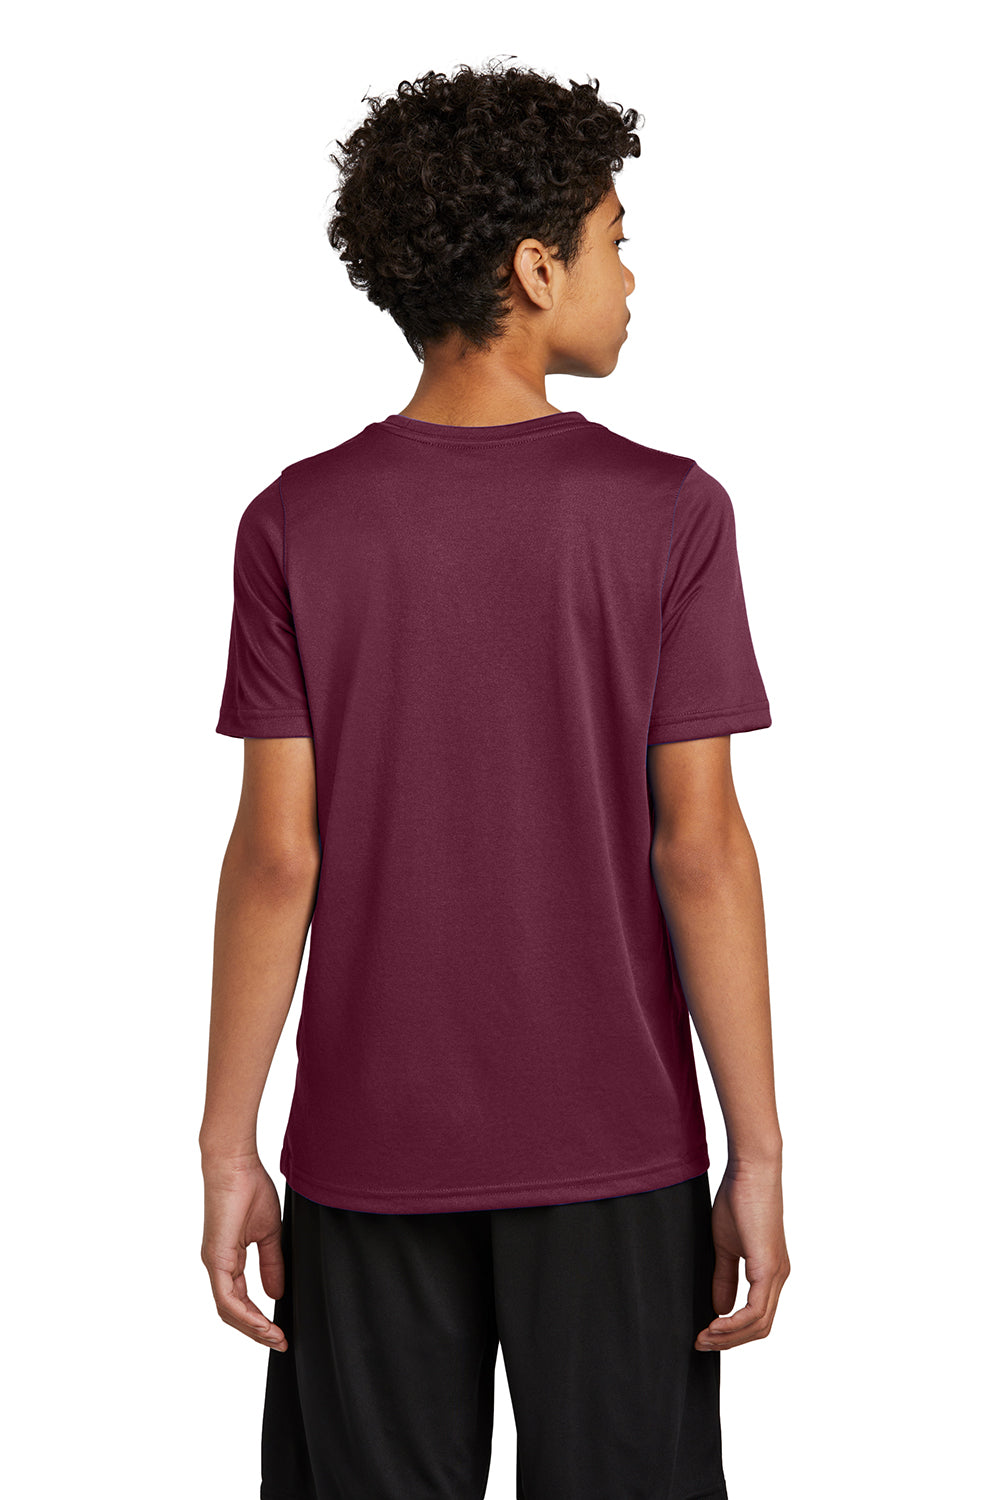 Nike NKDX8787 Youth rLegend Dri-Fit Moisture Wicking Short Sleeve Crewneck T-Shirt Deep Maroon Model Back